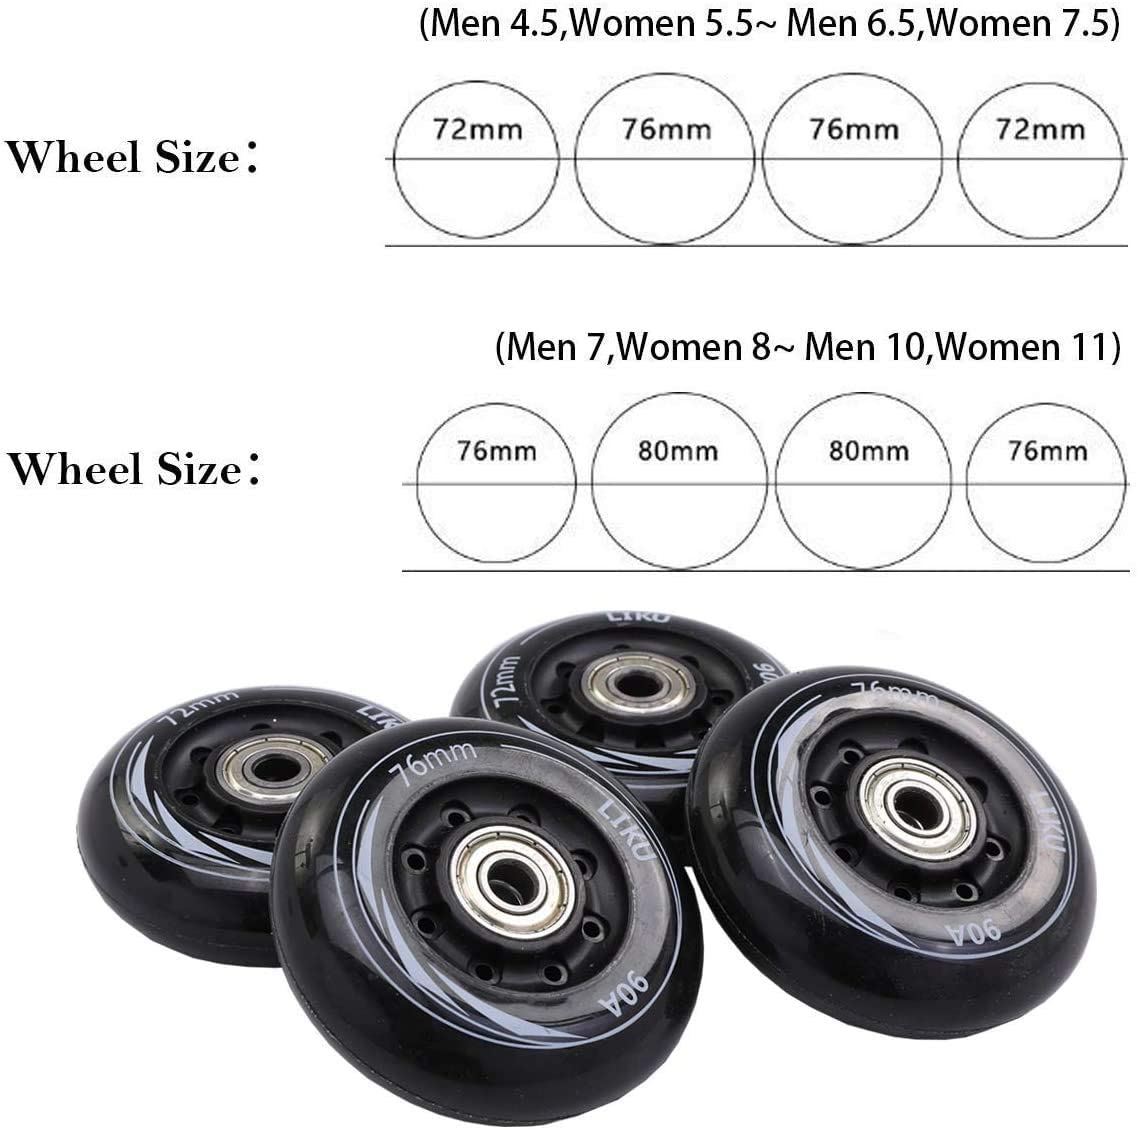 LIKU Unisex Professional Inline Skates for Women Men Adult Youth Black Rollerblade(Men 8,Women 9) - image 2 of 6